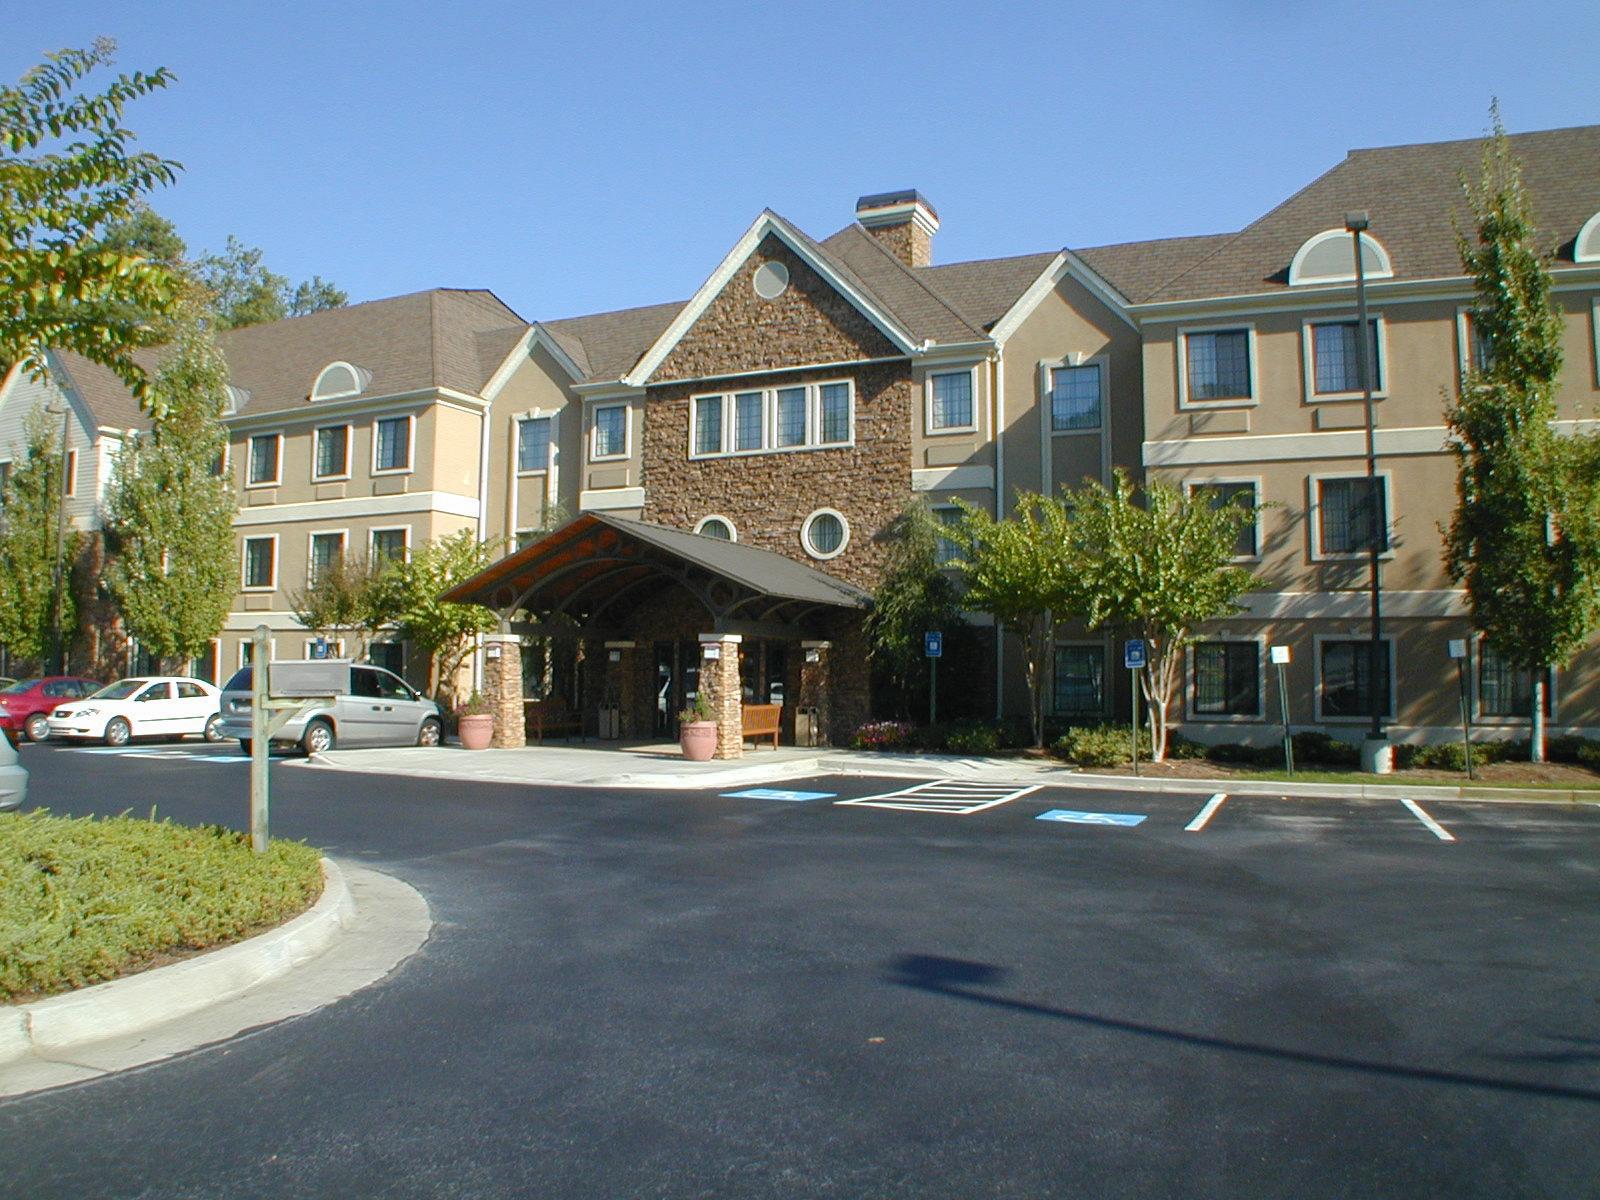 Photo of Staybridge Suites Alpharetta - North Point, Alpharetta, GA